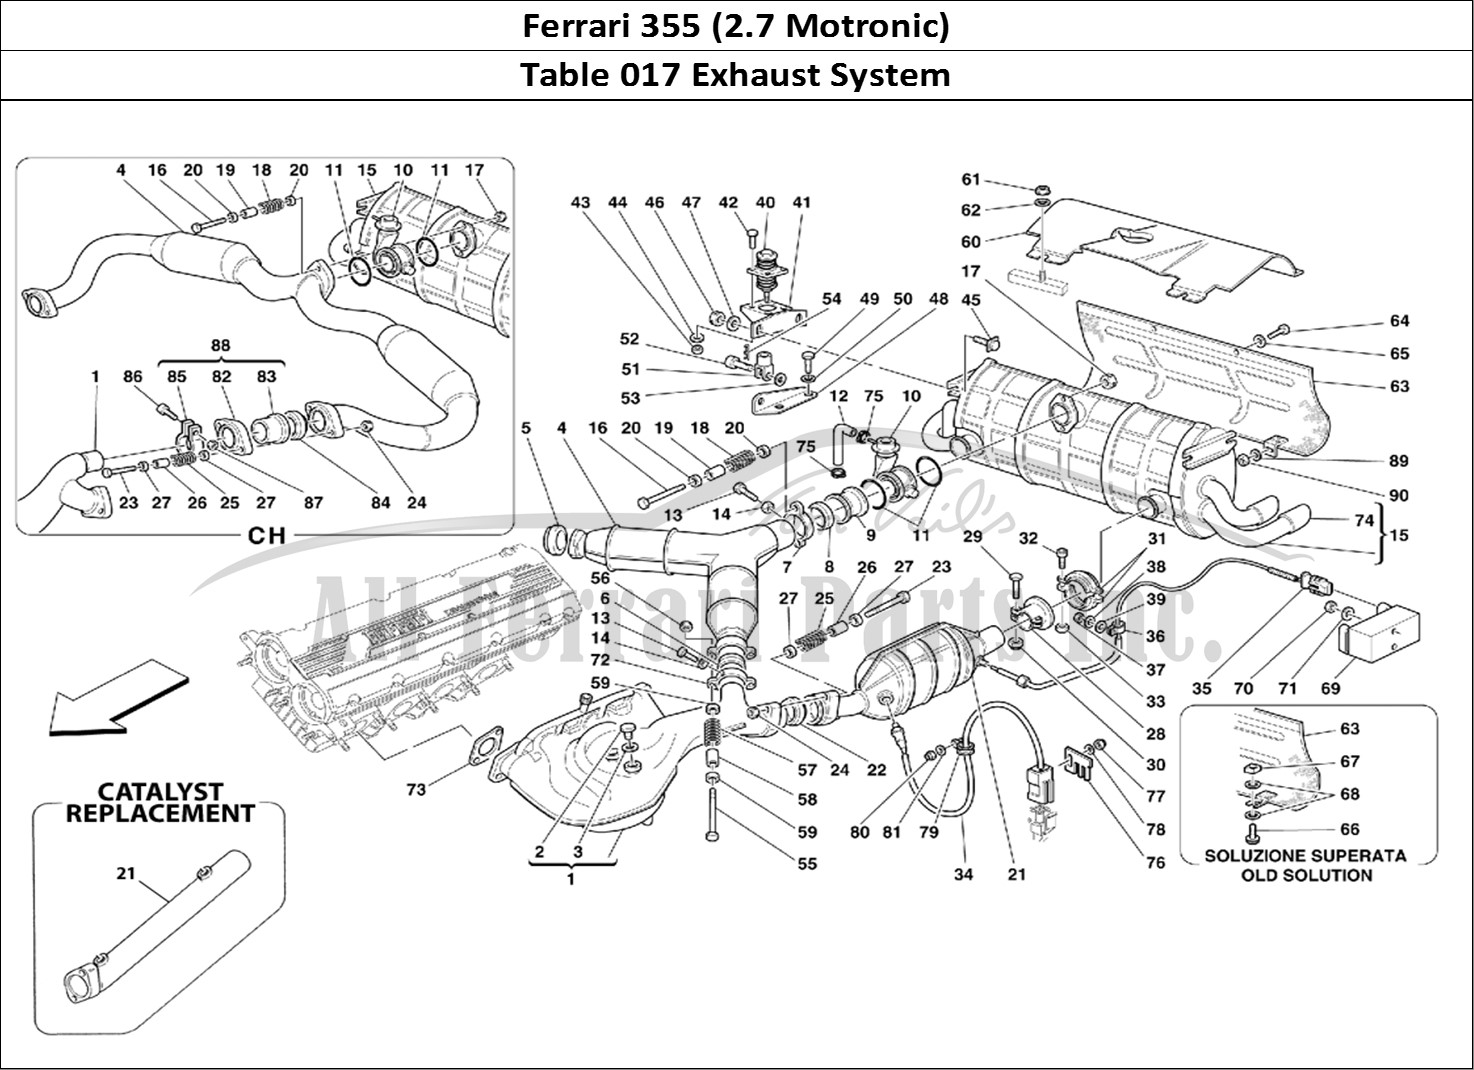 Ferrari Parts Ferrari 355 (2.7 Motronic) Page 017 Exhaust System